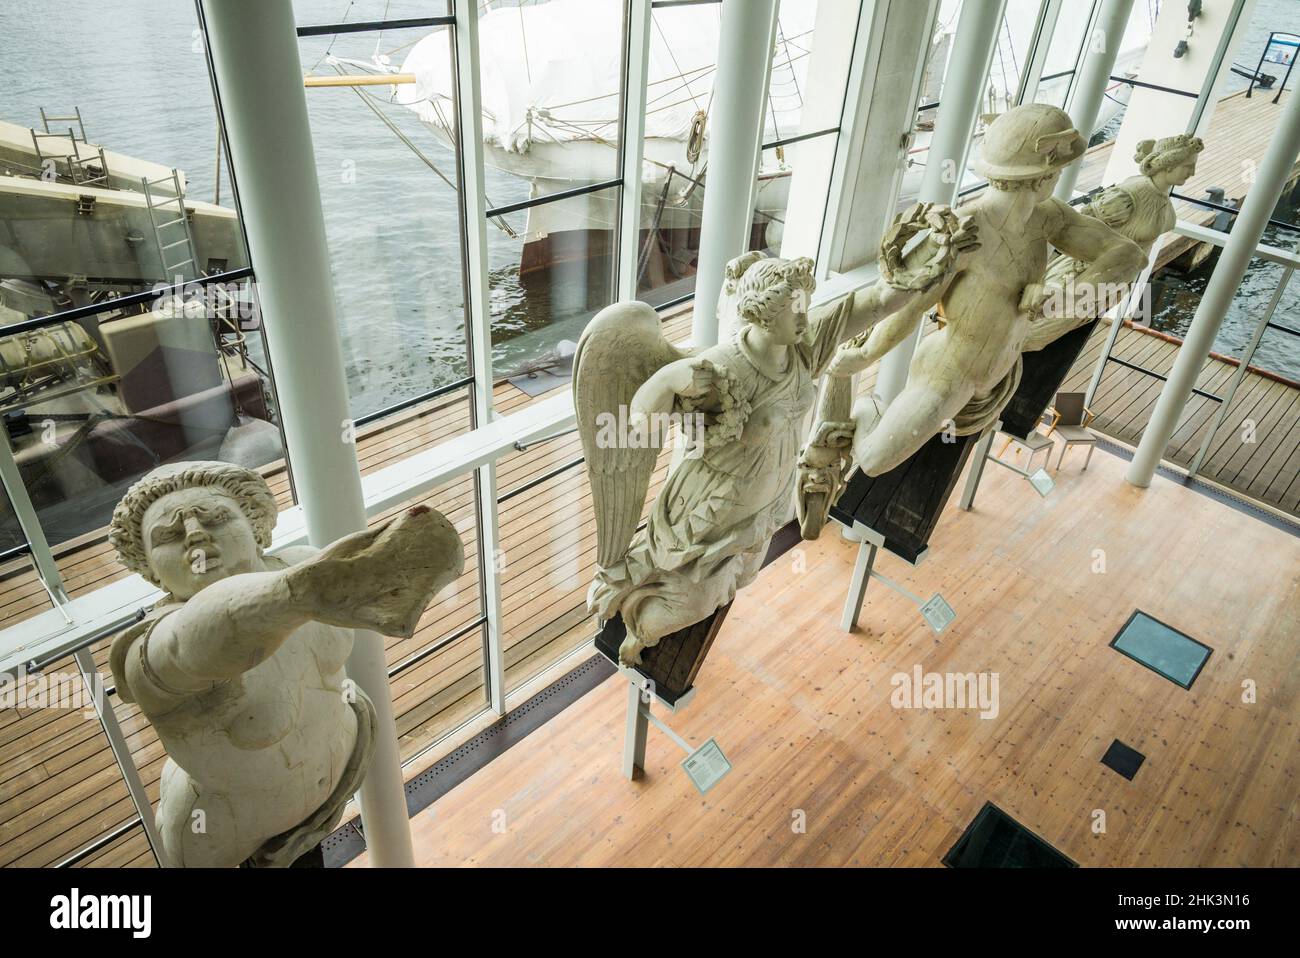 Southern Sweden, Karlskrona, Marinmuseum, gallery of ship figureheads Stock Photo